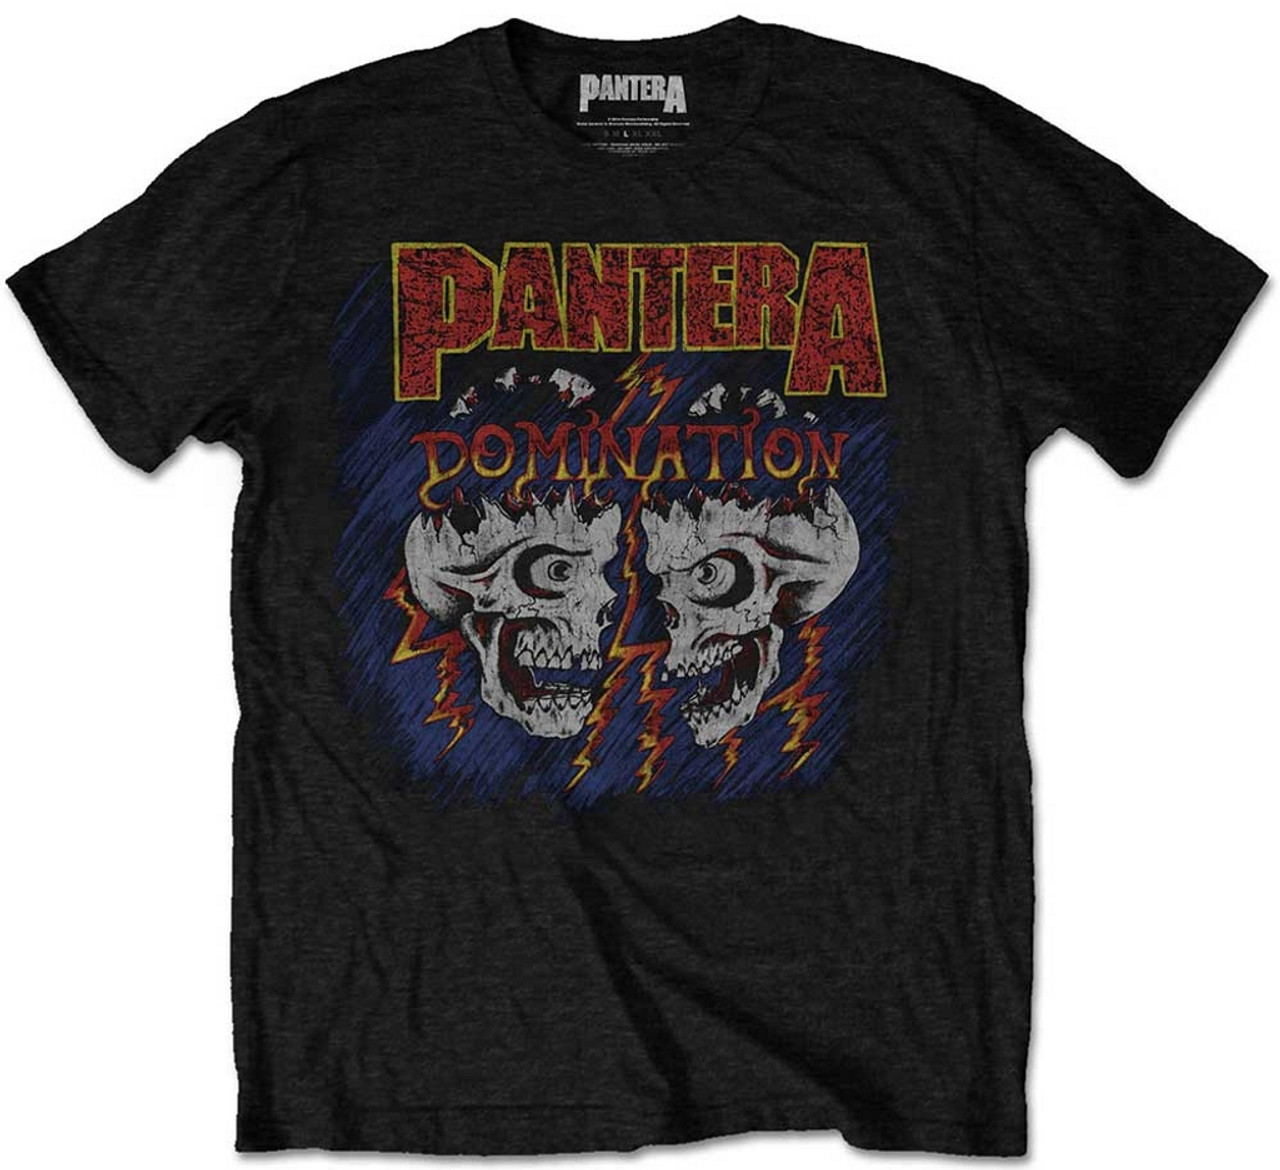 Pantera 'Domination' T-Shirt